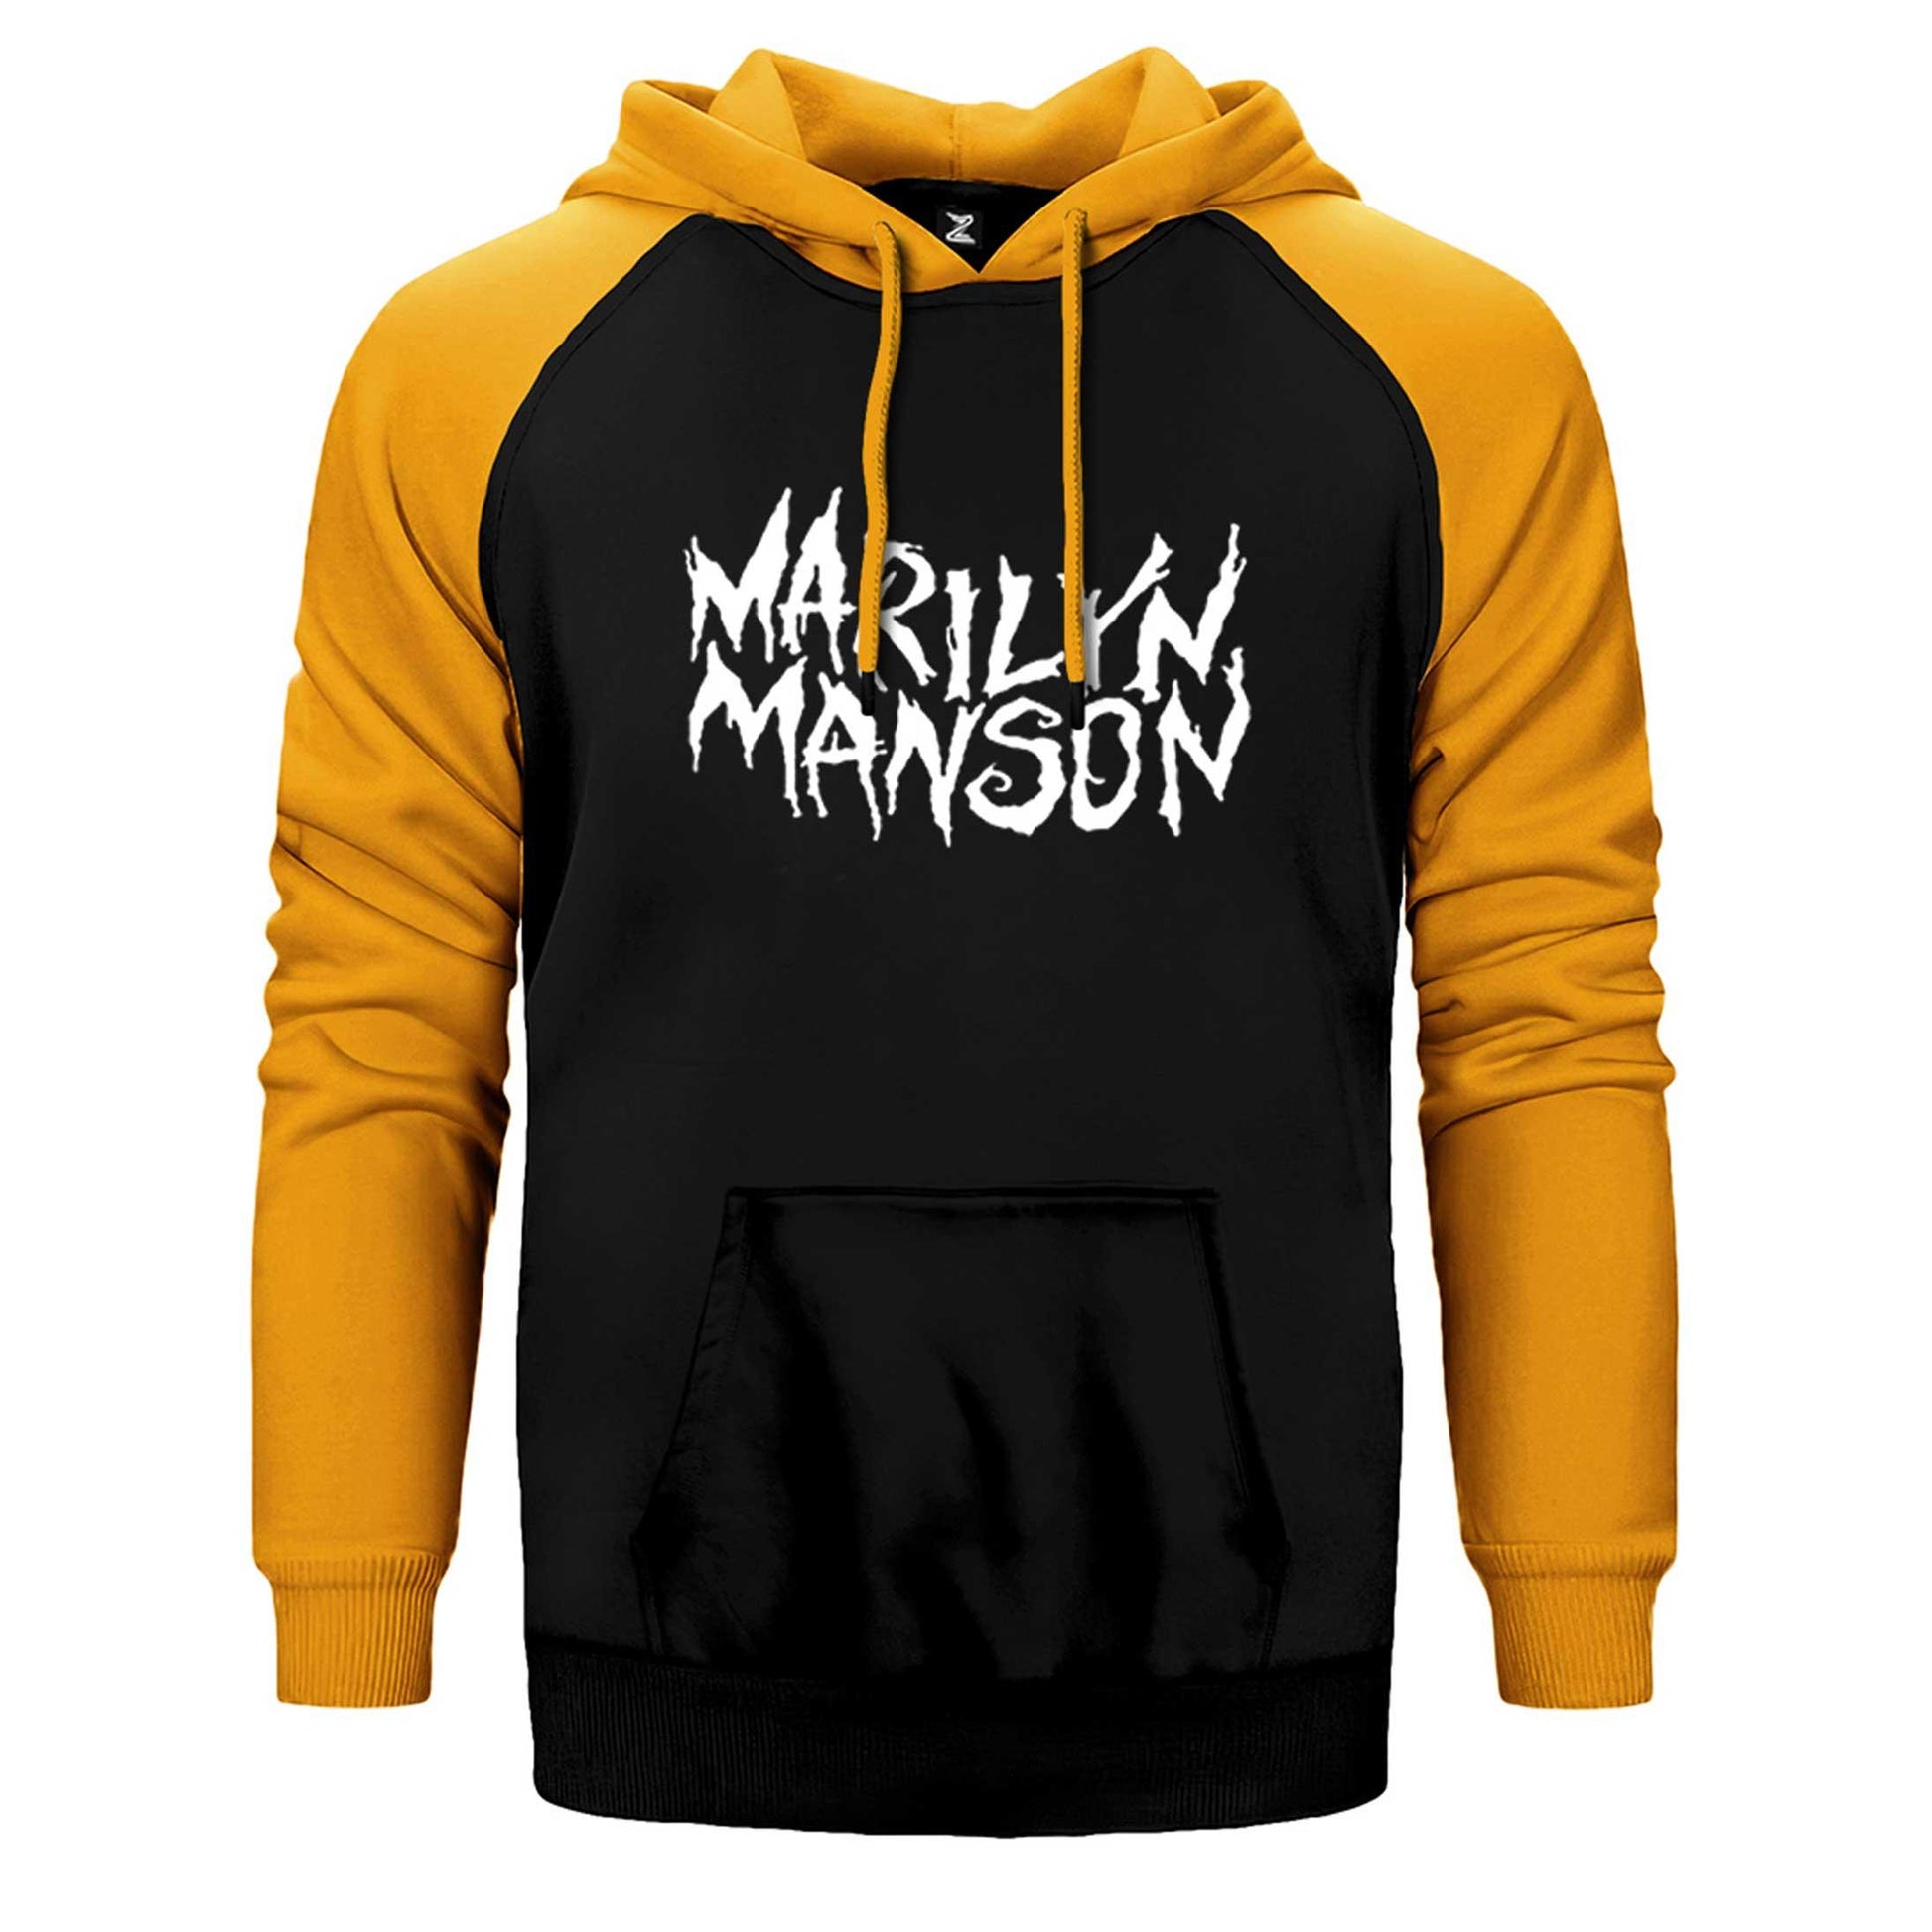 Marilyn Manson Iconic Text Çift Renk Reglan Kol Sweatshirt / Hoodie - Zepplingiyim